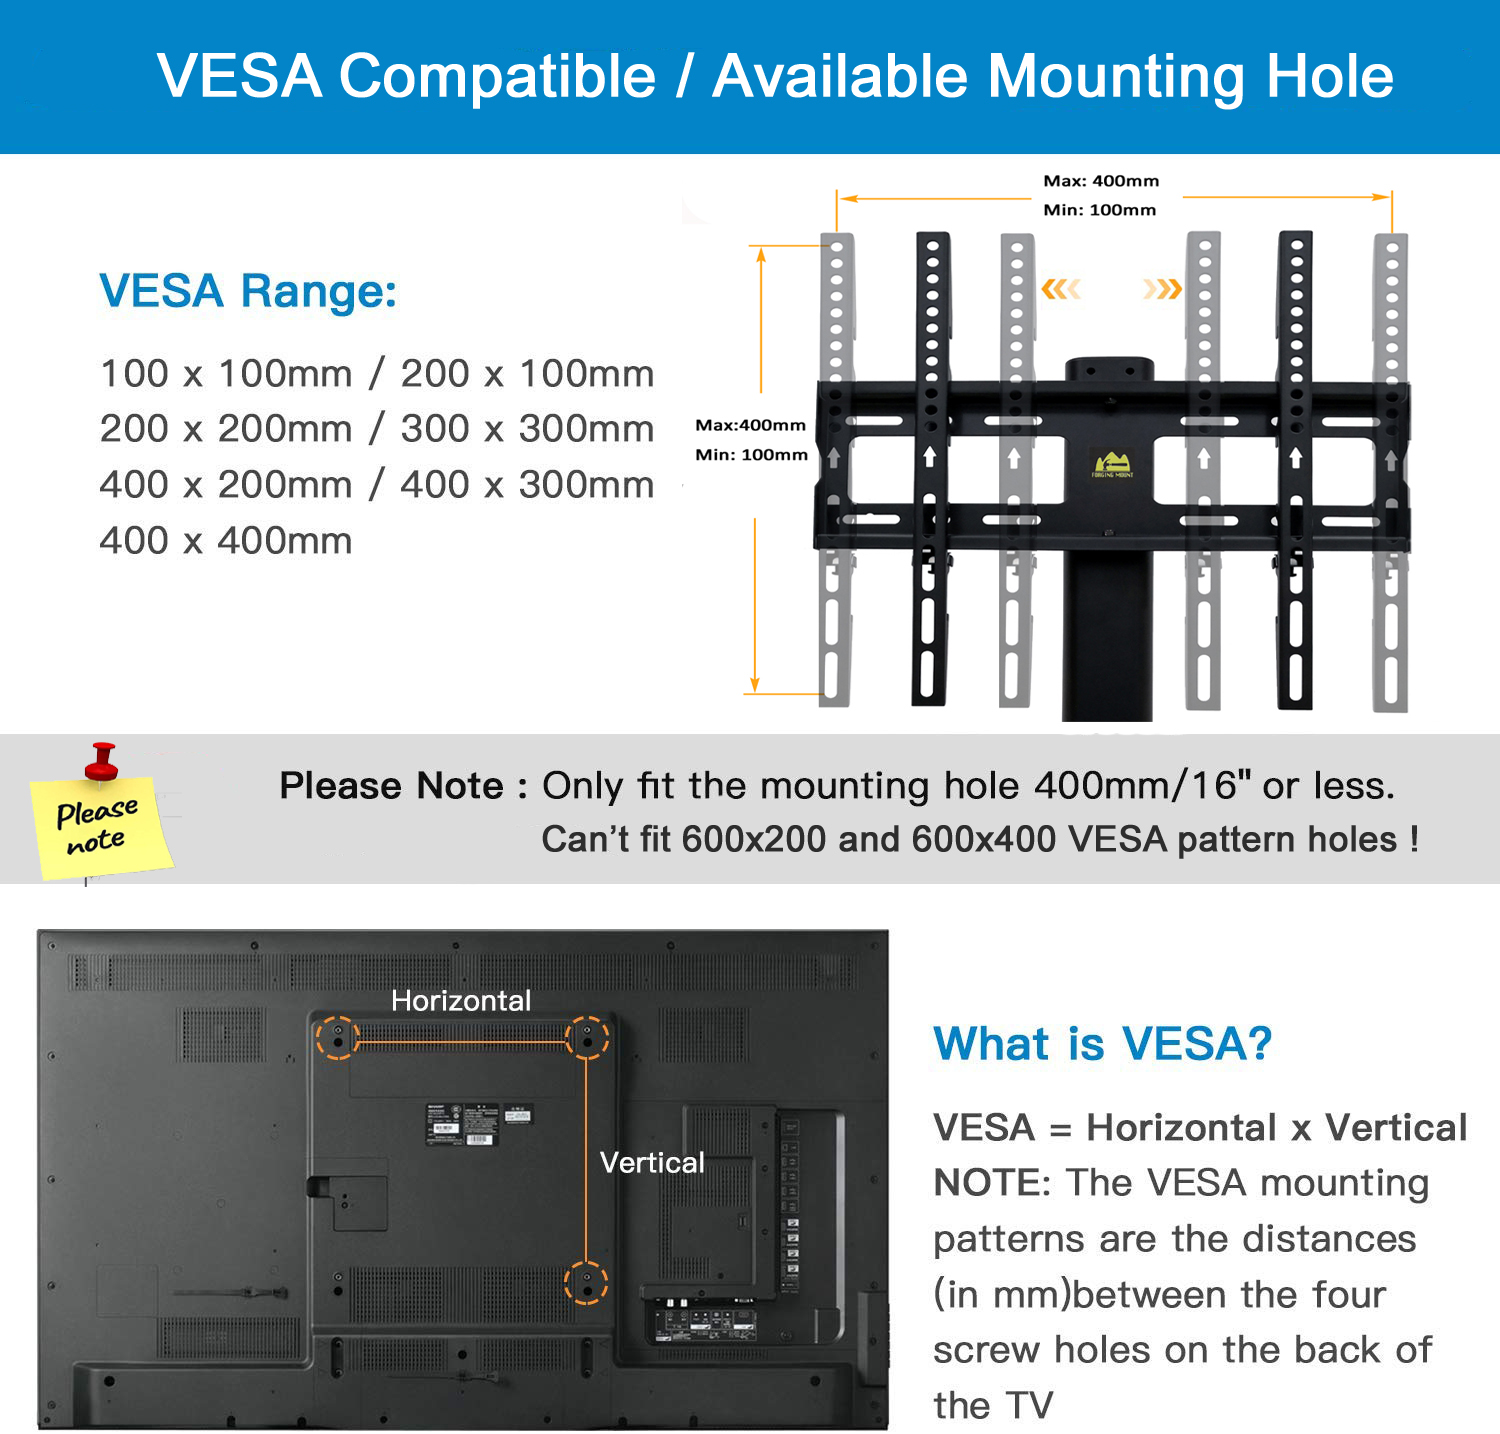 what is the VESA?